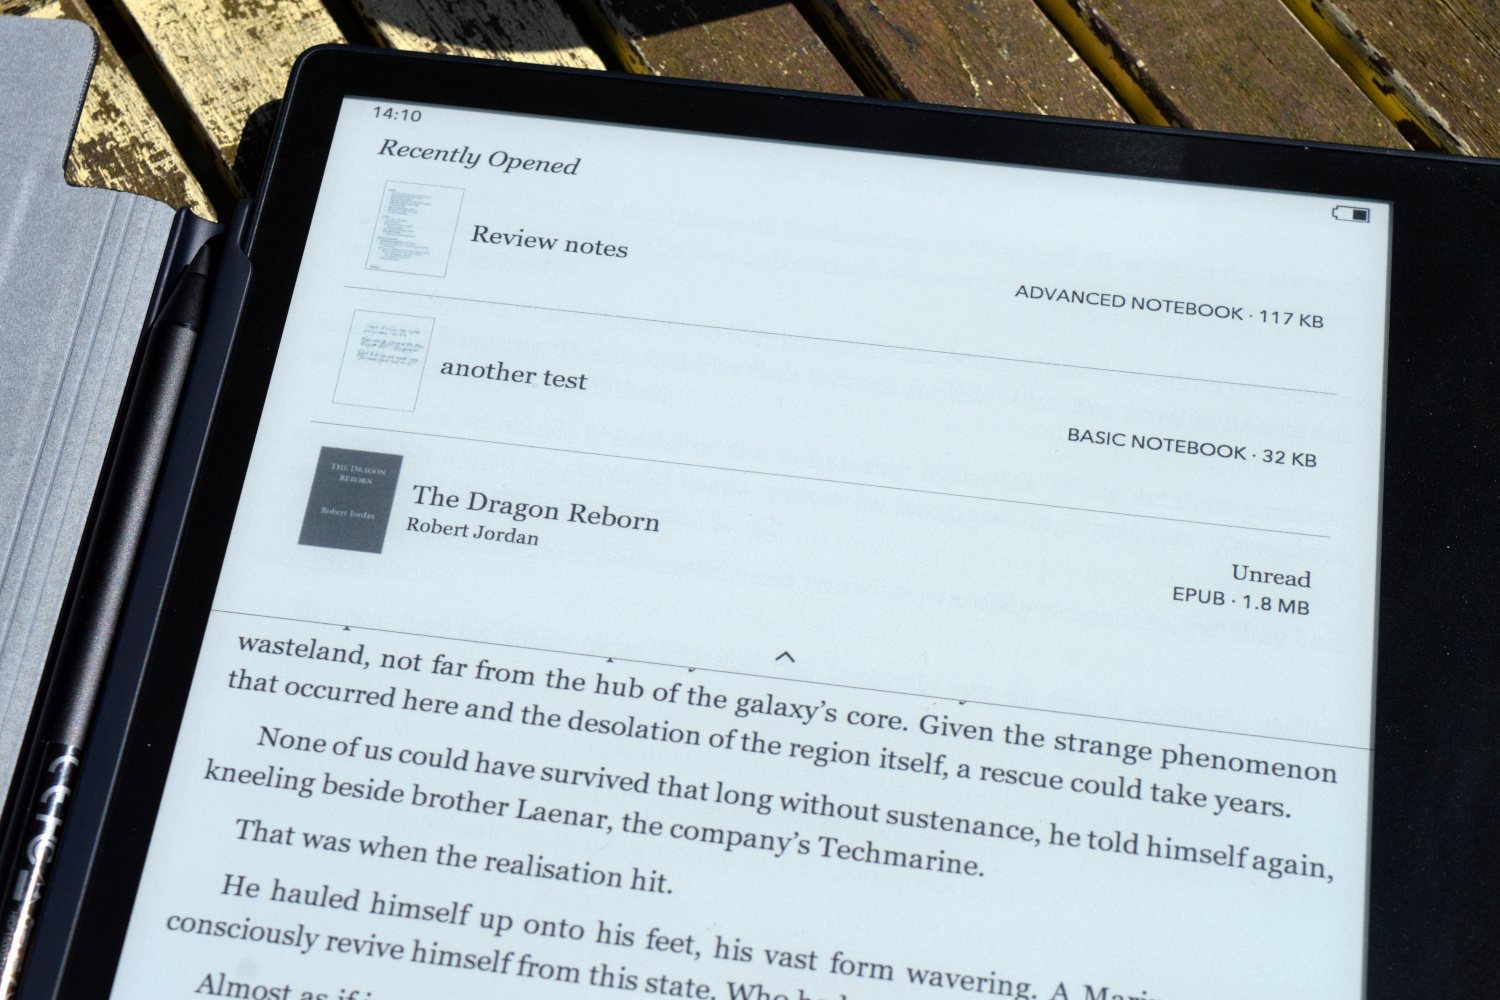 Hands on Review of the Kobo Elipsa - Good e-Reader